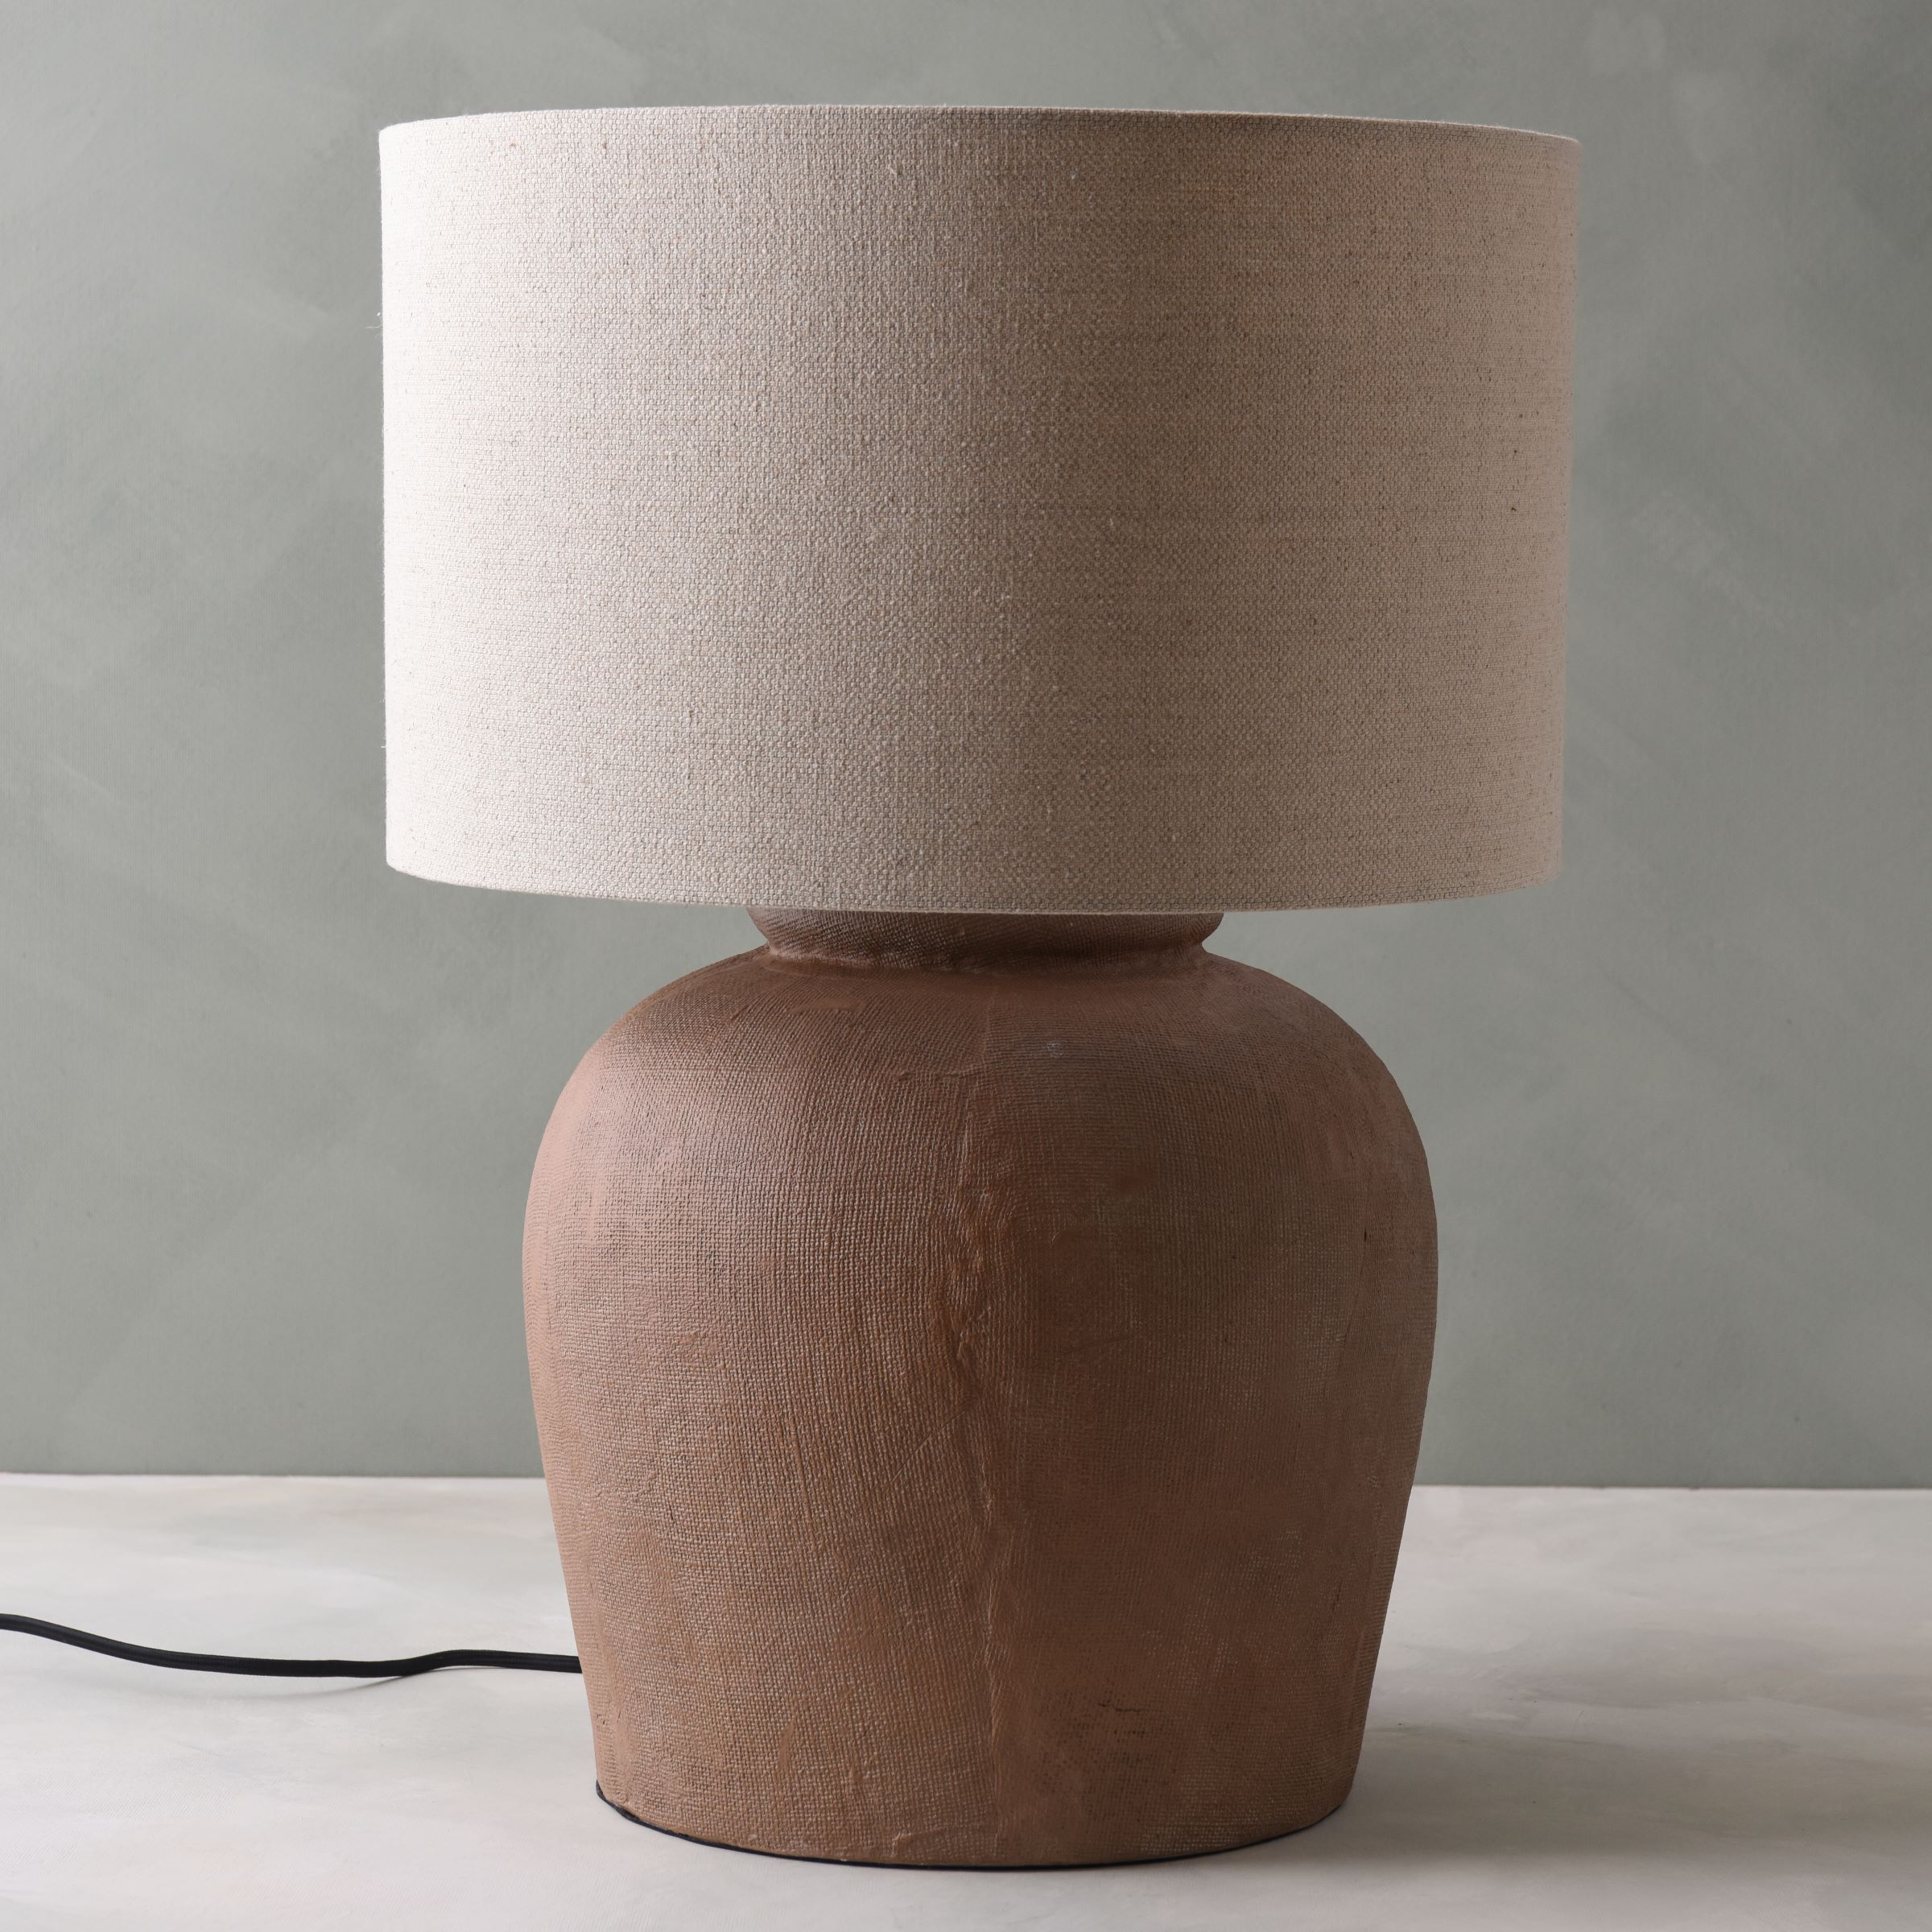 Clay Greenleigh Table Lamp $248.00